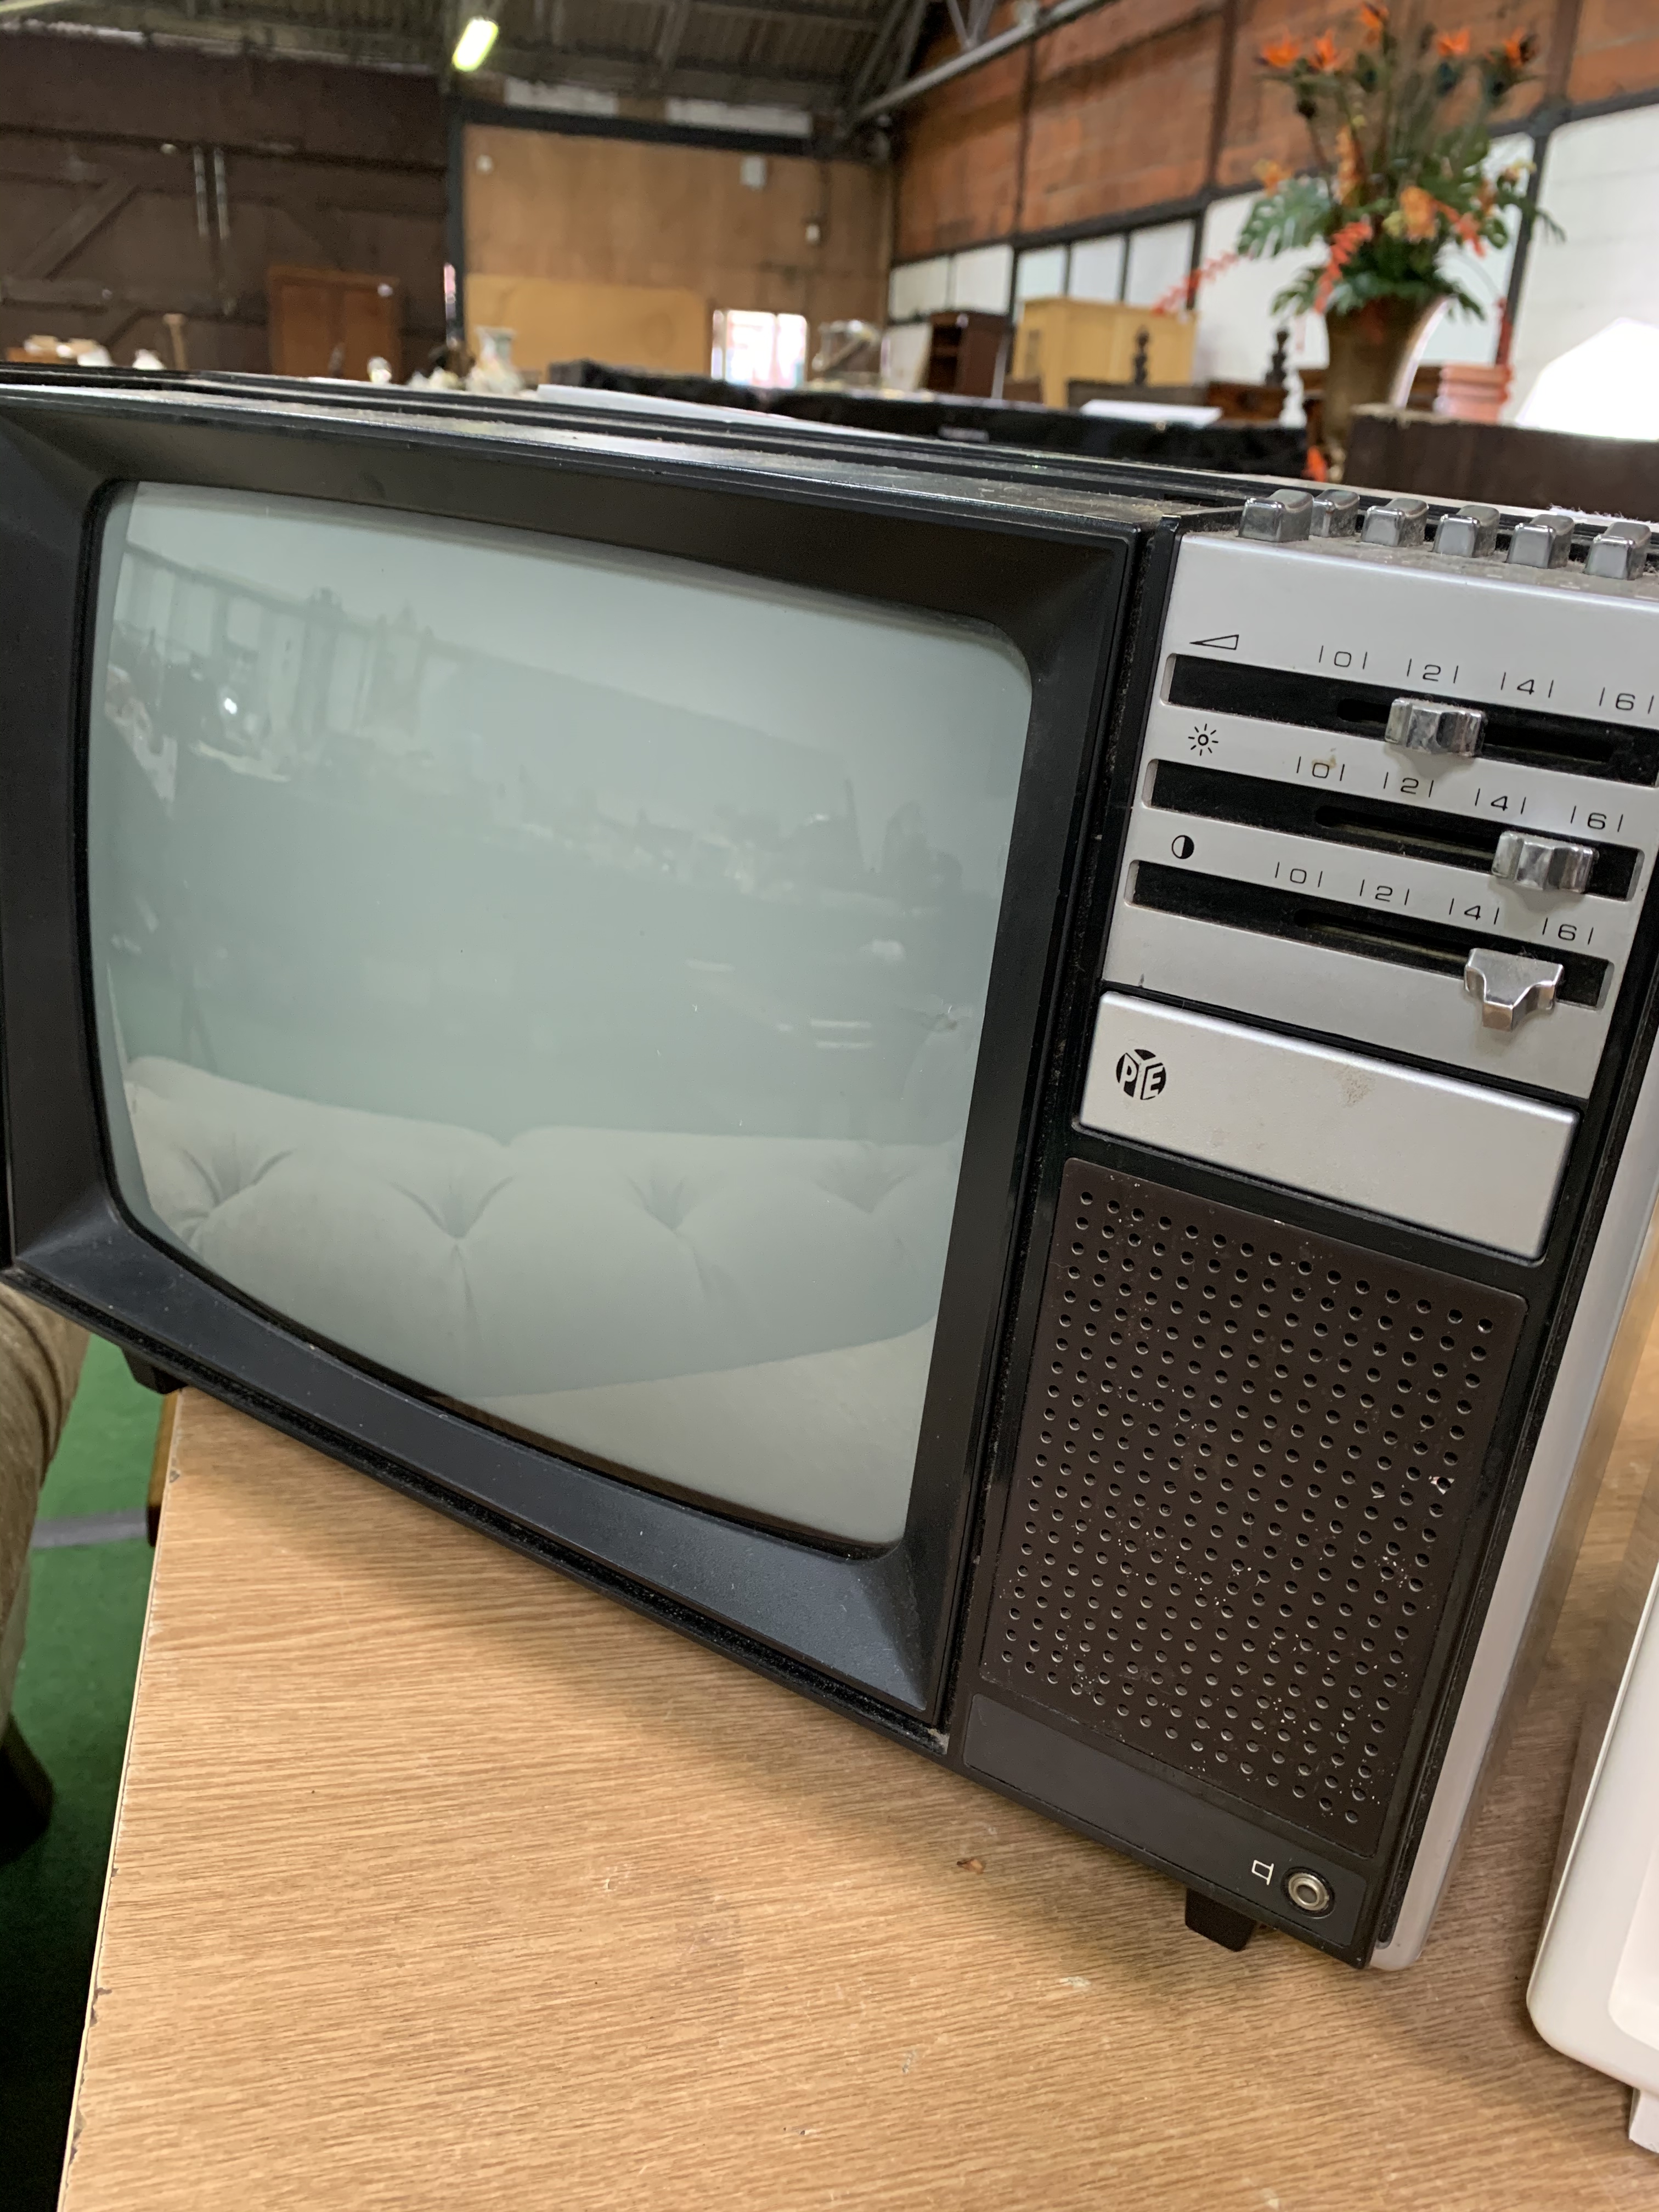 A Pye portable 14 inch TV set, and a boxed Ferguson TV model 3847 - Image 2 of 2